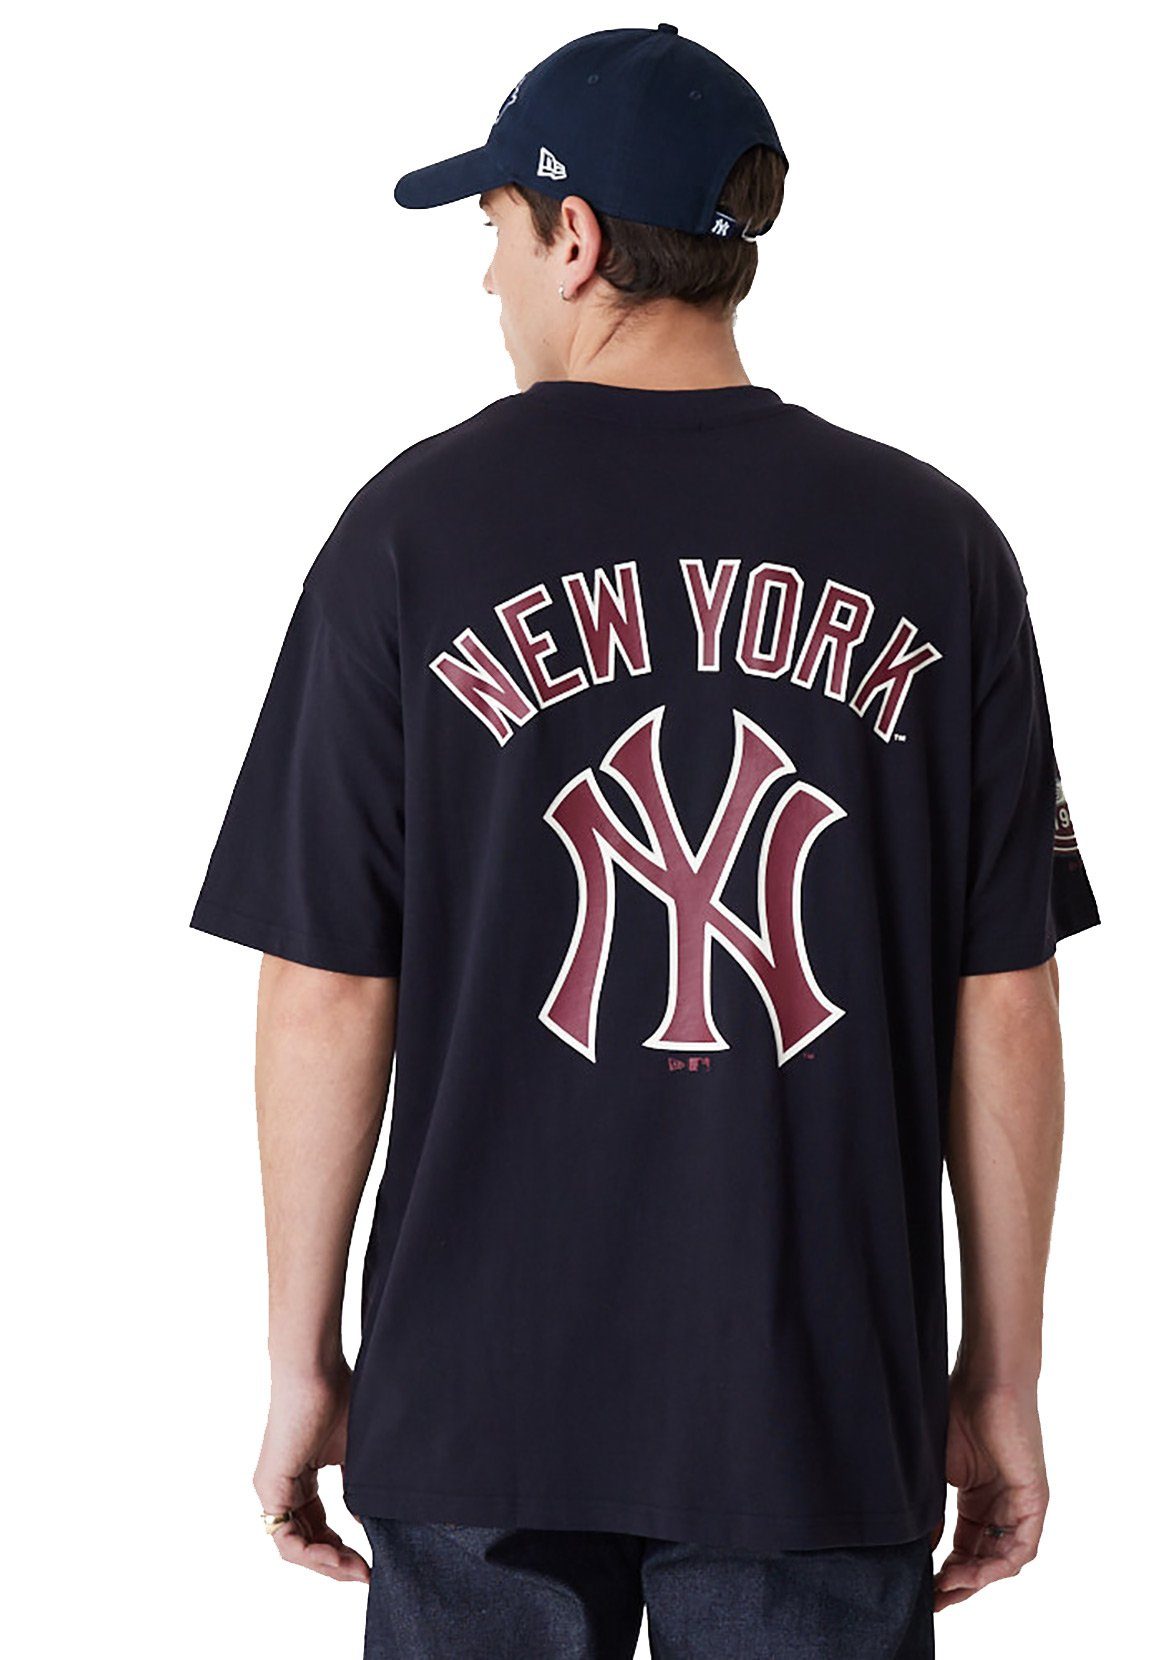 TEE OS New T-Shirt T-Shirt Herren MLB NY LOGO Era LARGE Era Navy New YANKEES